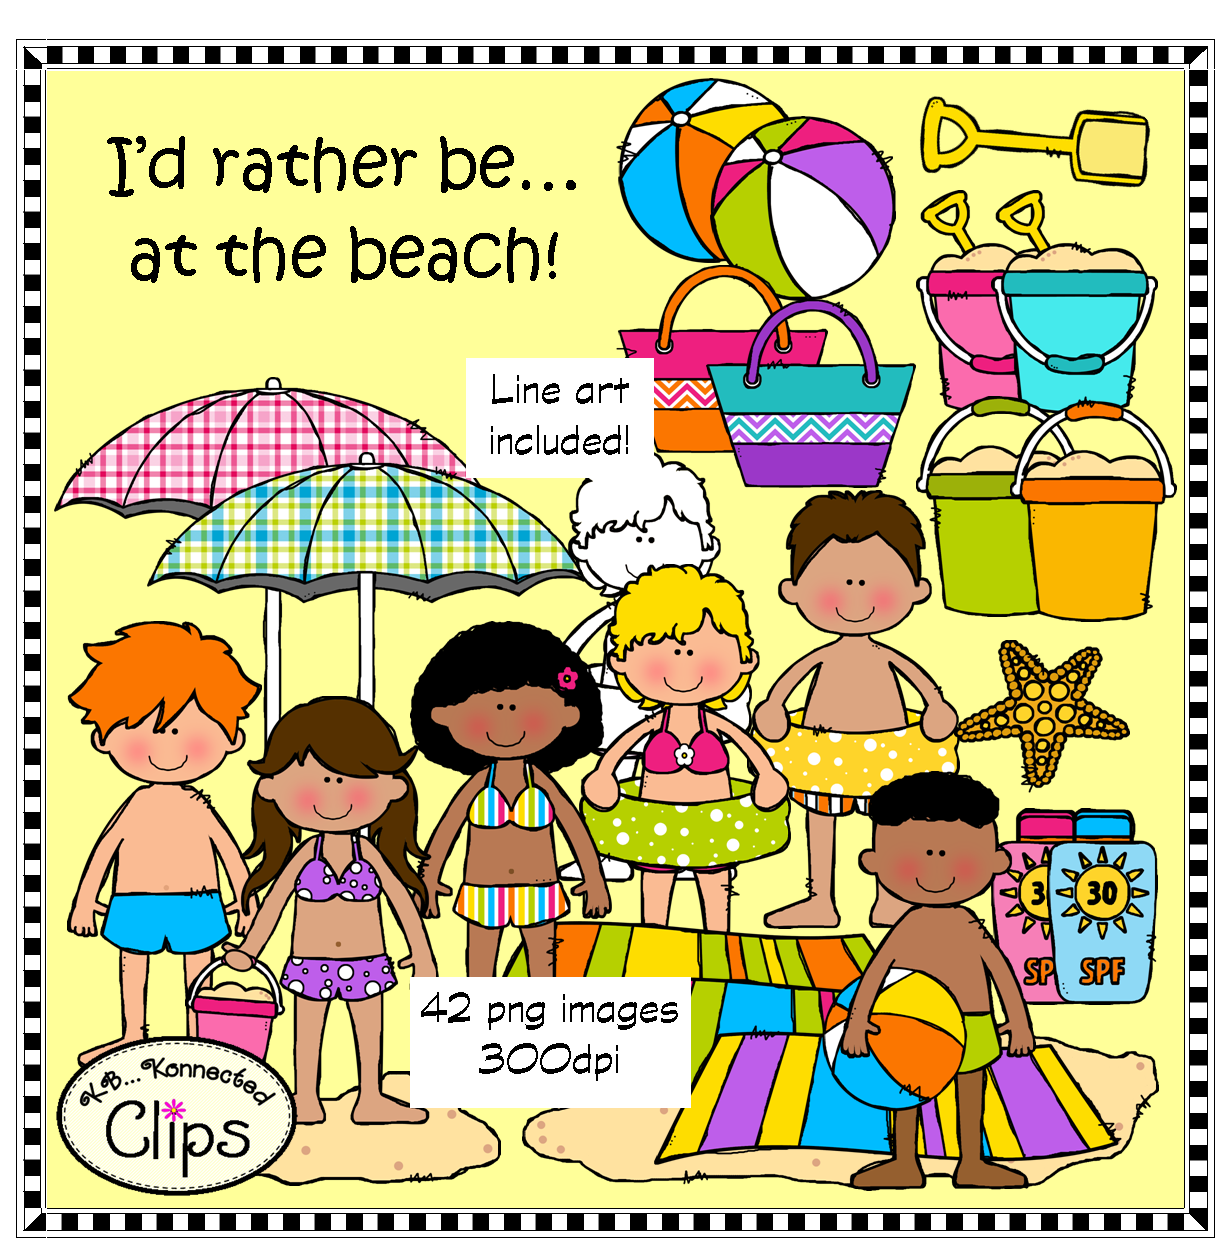 http://www.teacherspayteachers.com/Product/Id-rather-beat-the-beach-Clip-Art-Collection-1268045